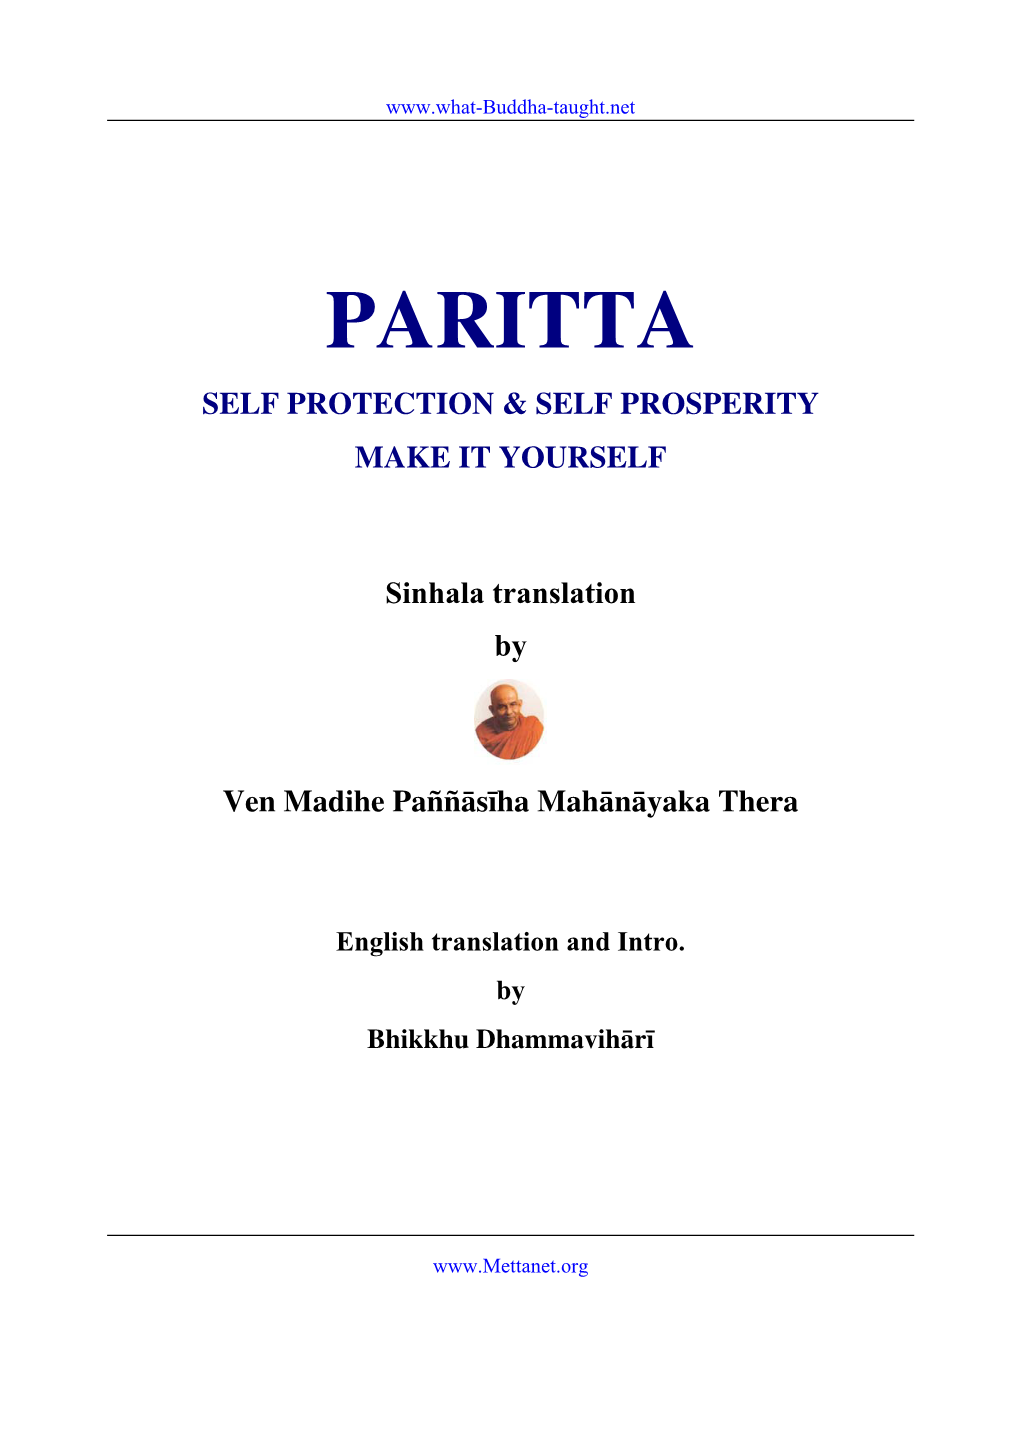 Paritta Self Protection & Self Prosperity Make It Yourself